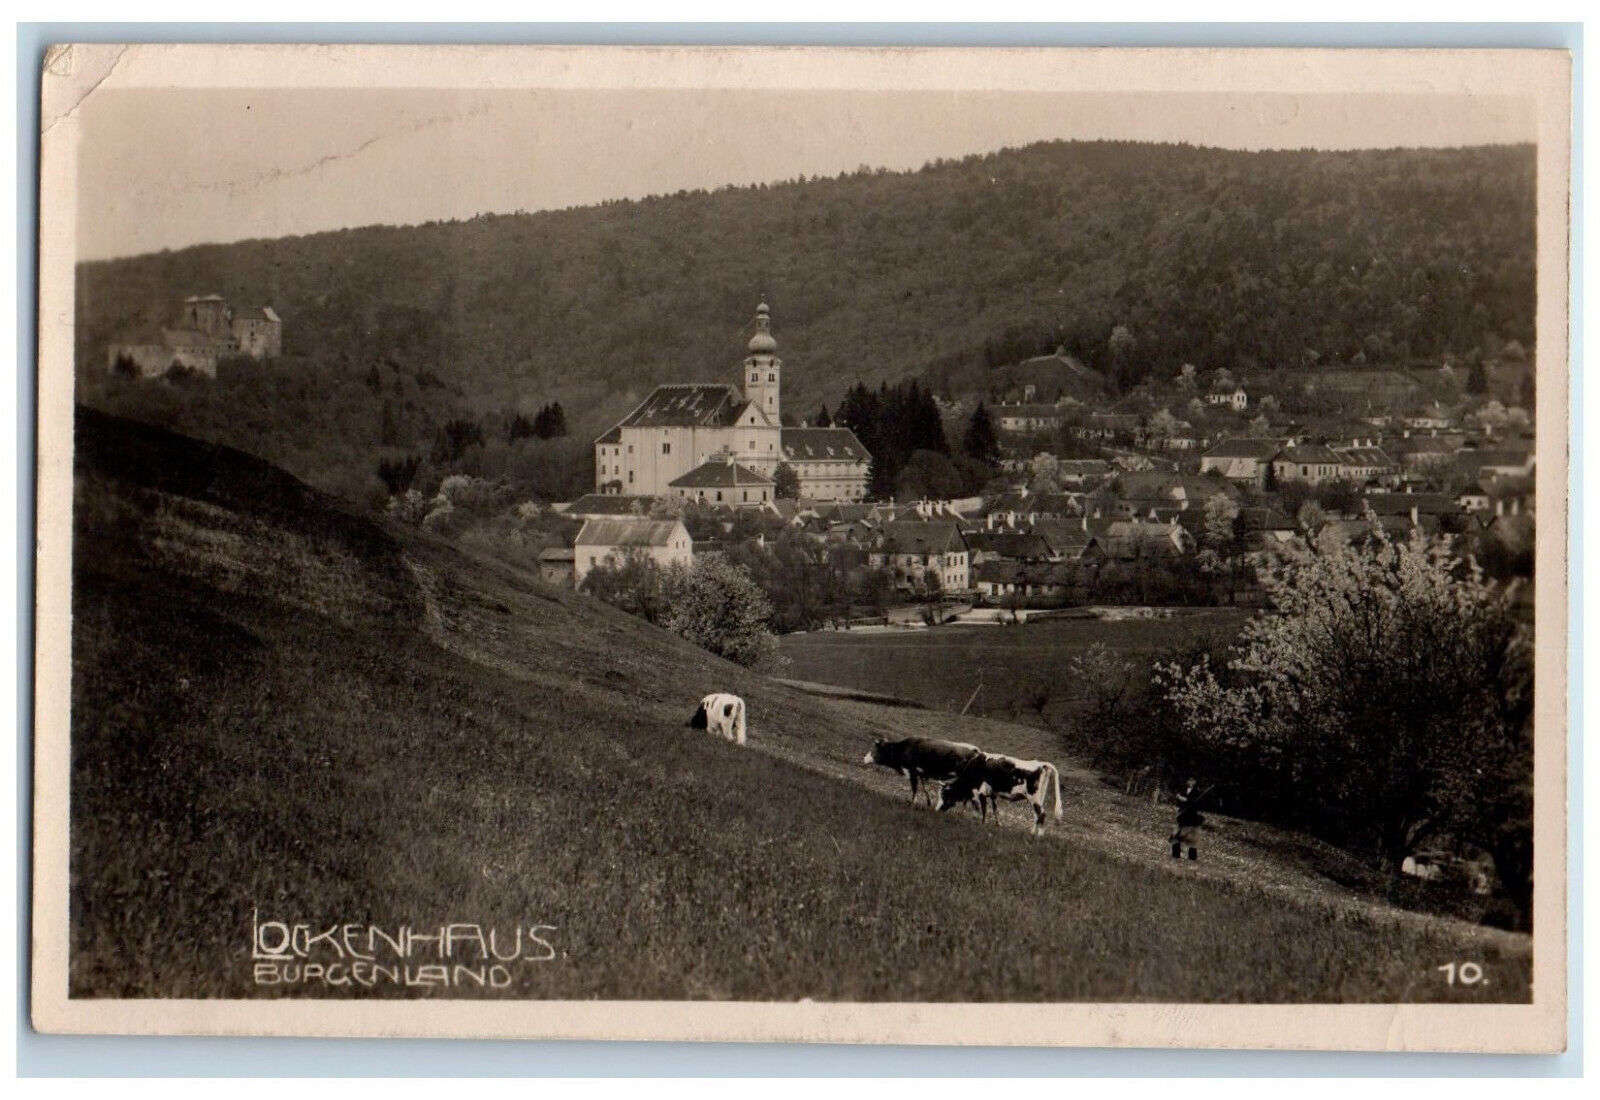 Lockenhaus Burgenland Austria Postcard General View 1930 Posted RPPC Photo